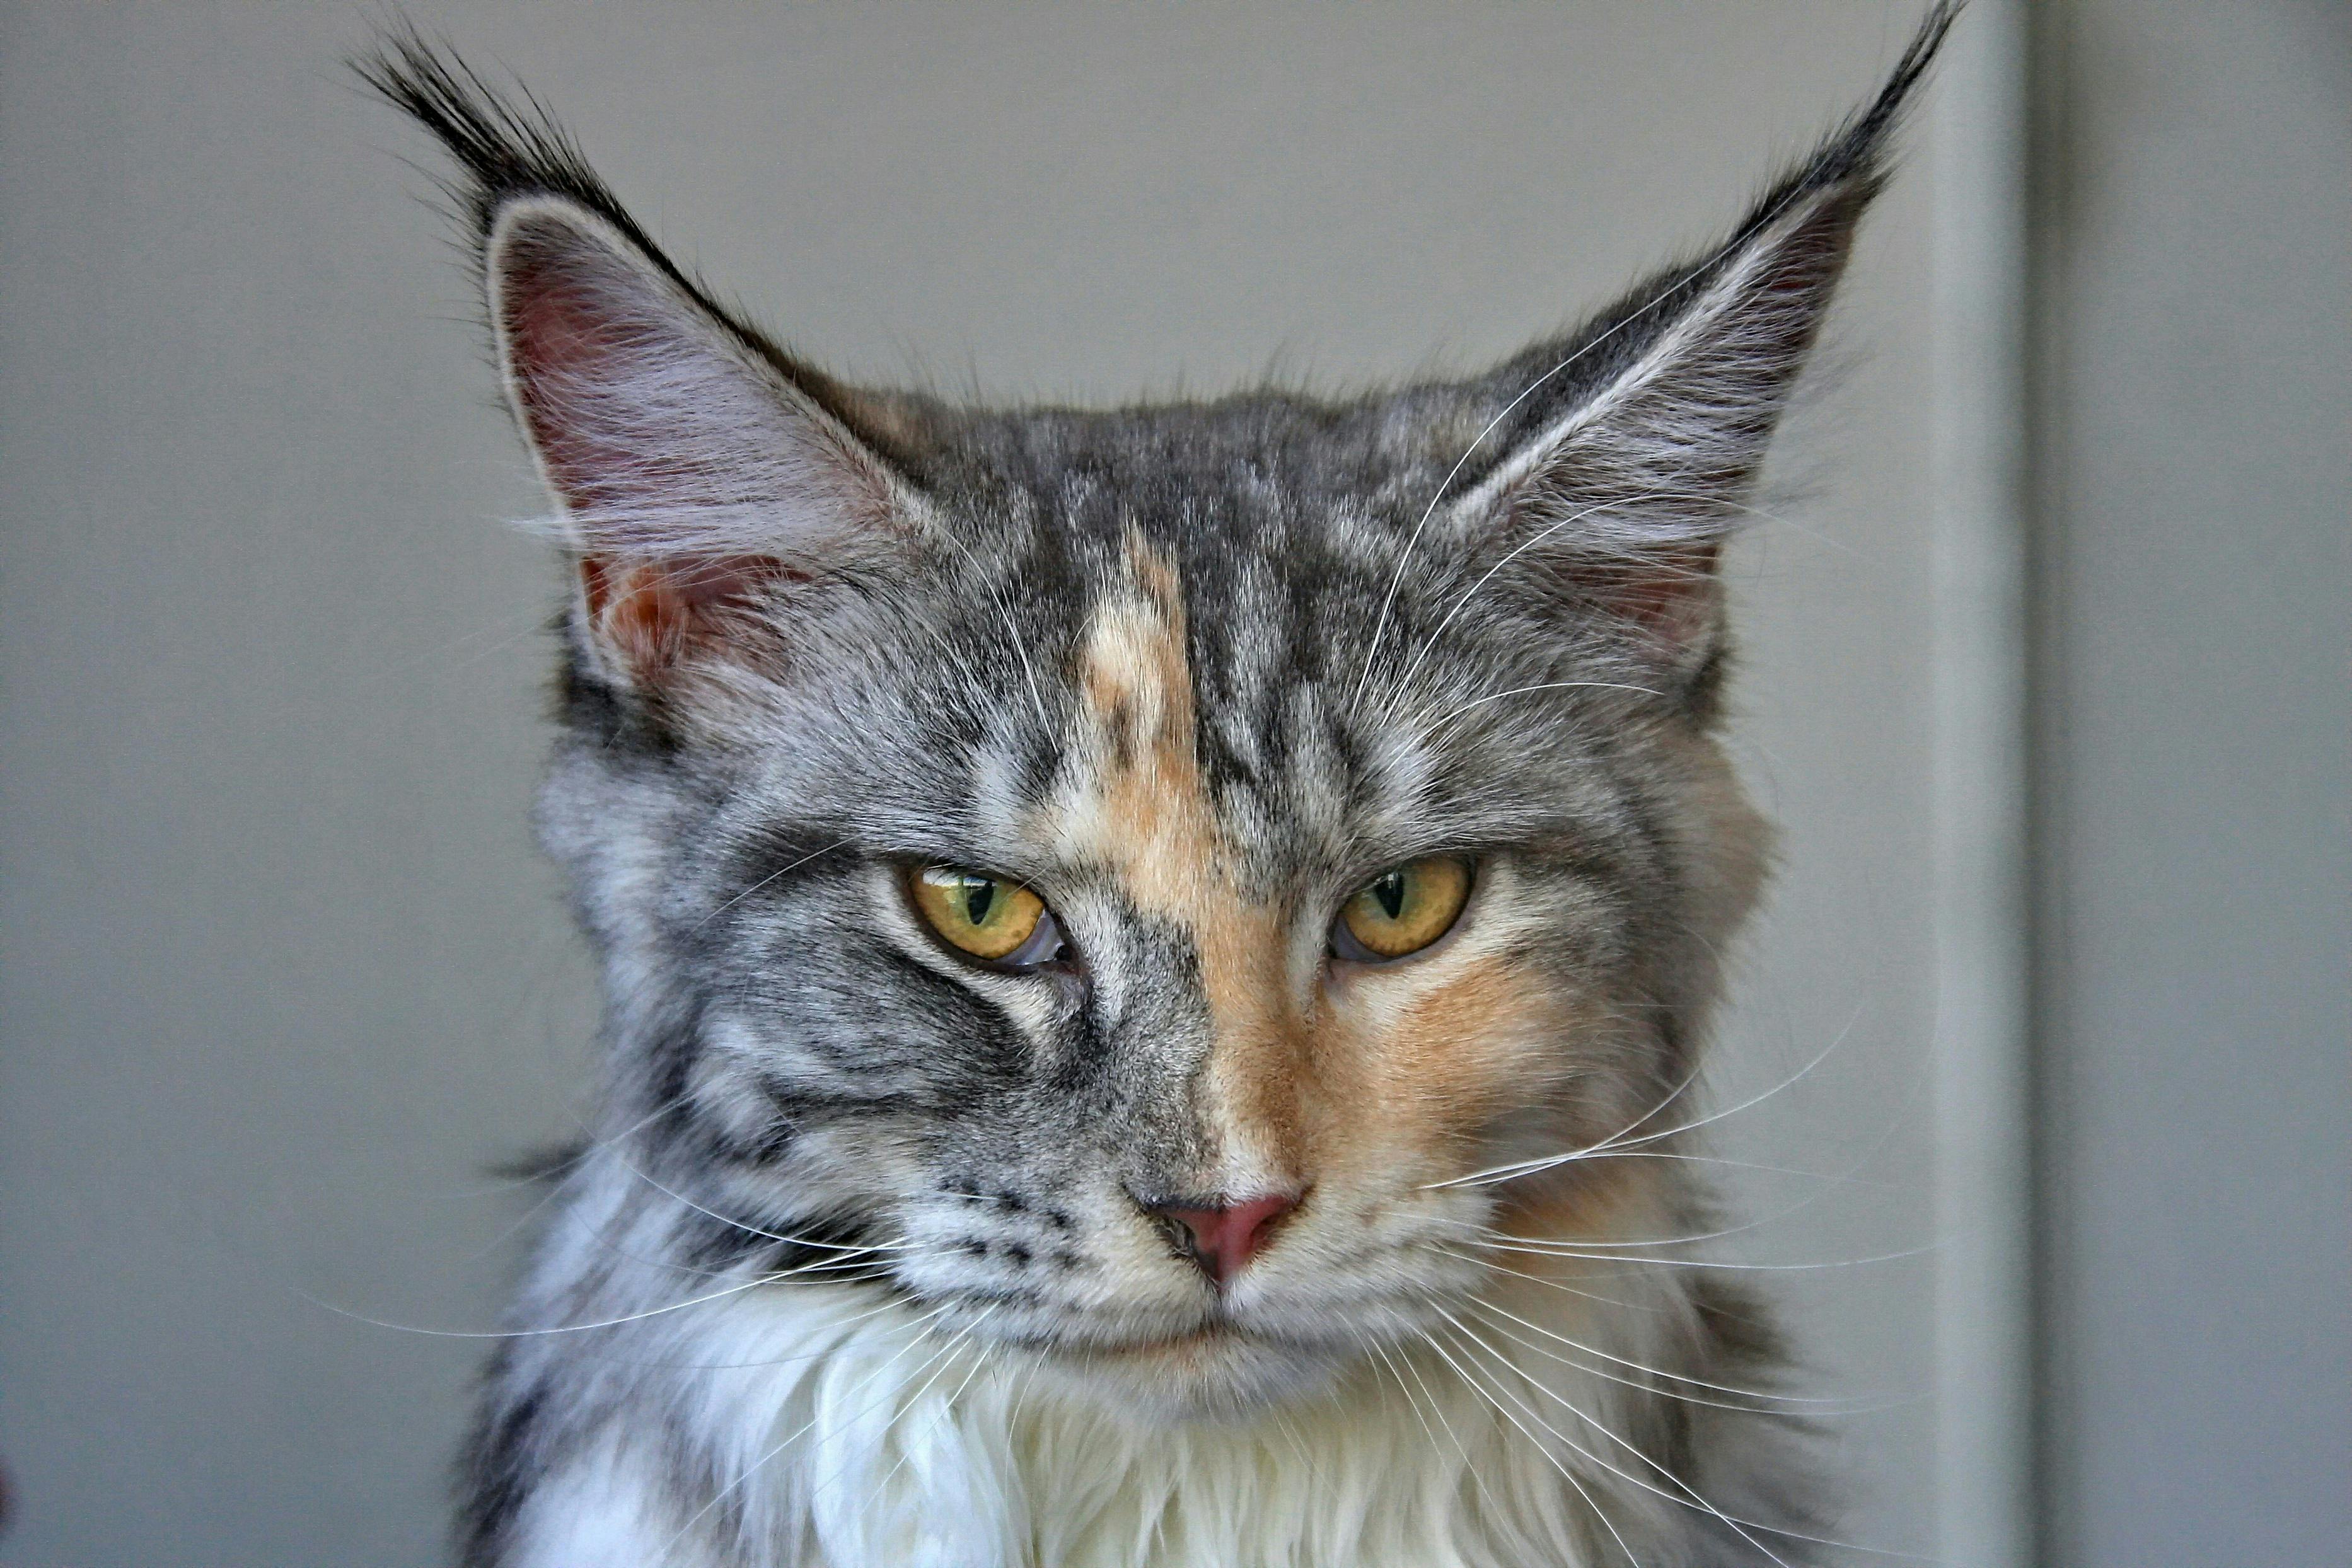 Grey, white, and orange tabby cat.